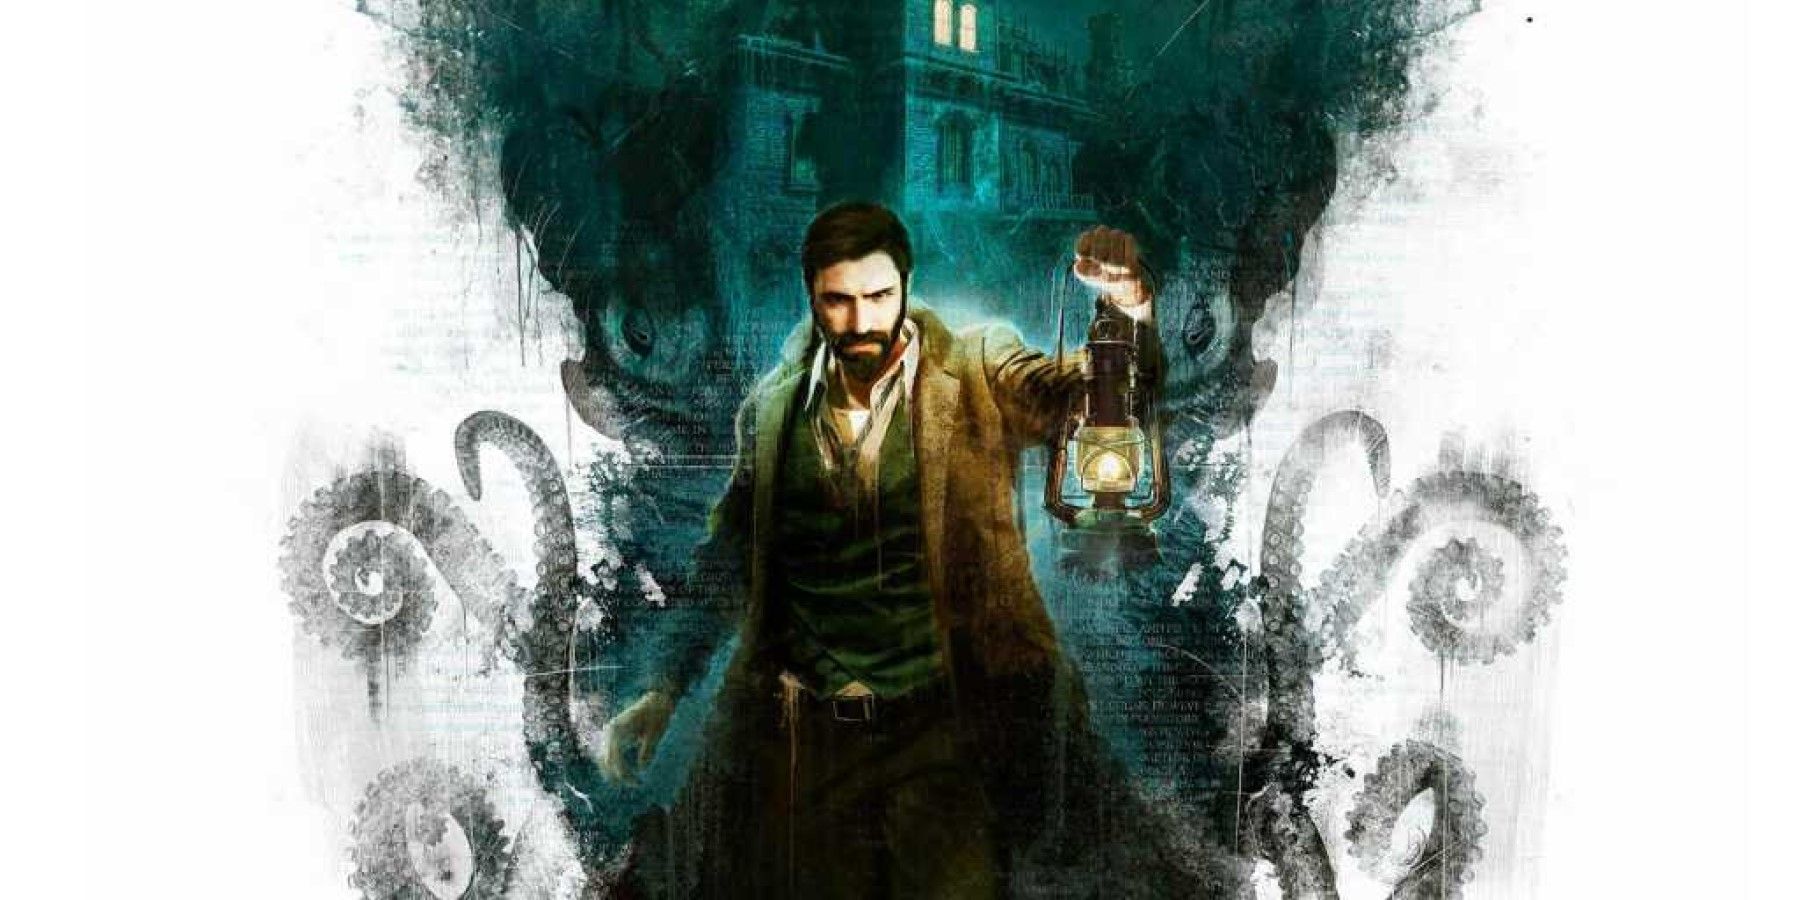 H.P. Lovecrafts innflytelse i spill forklarte